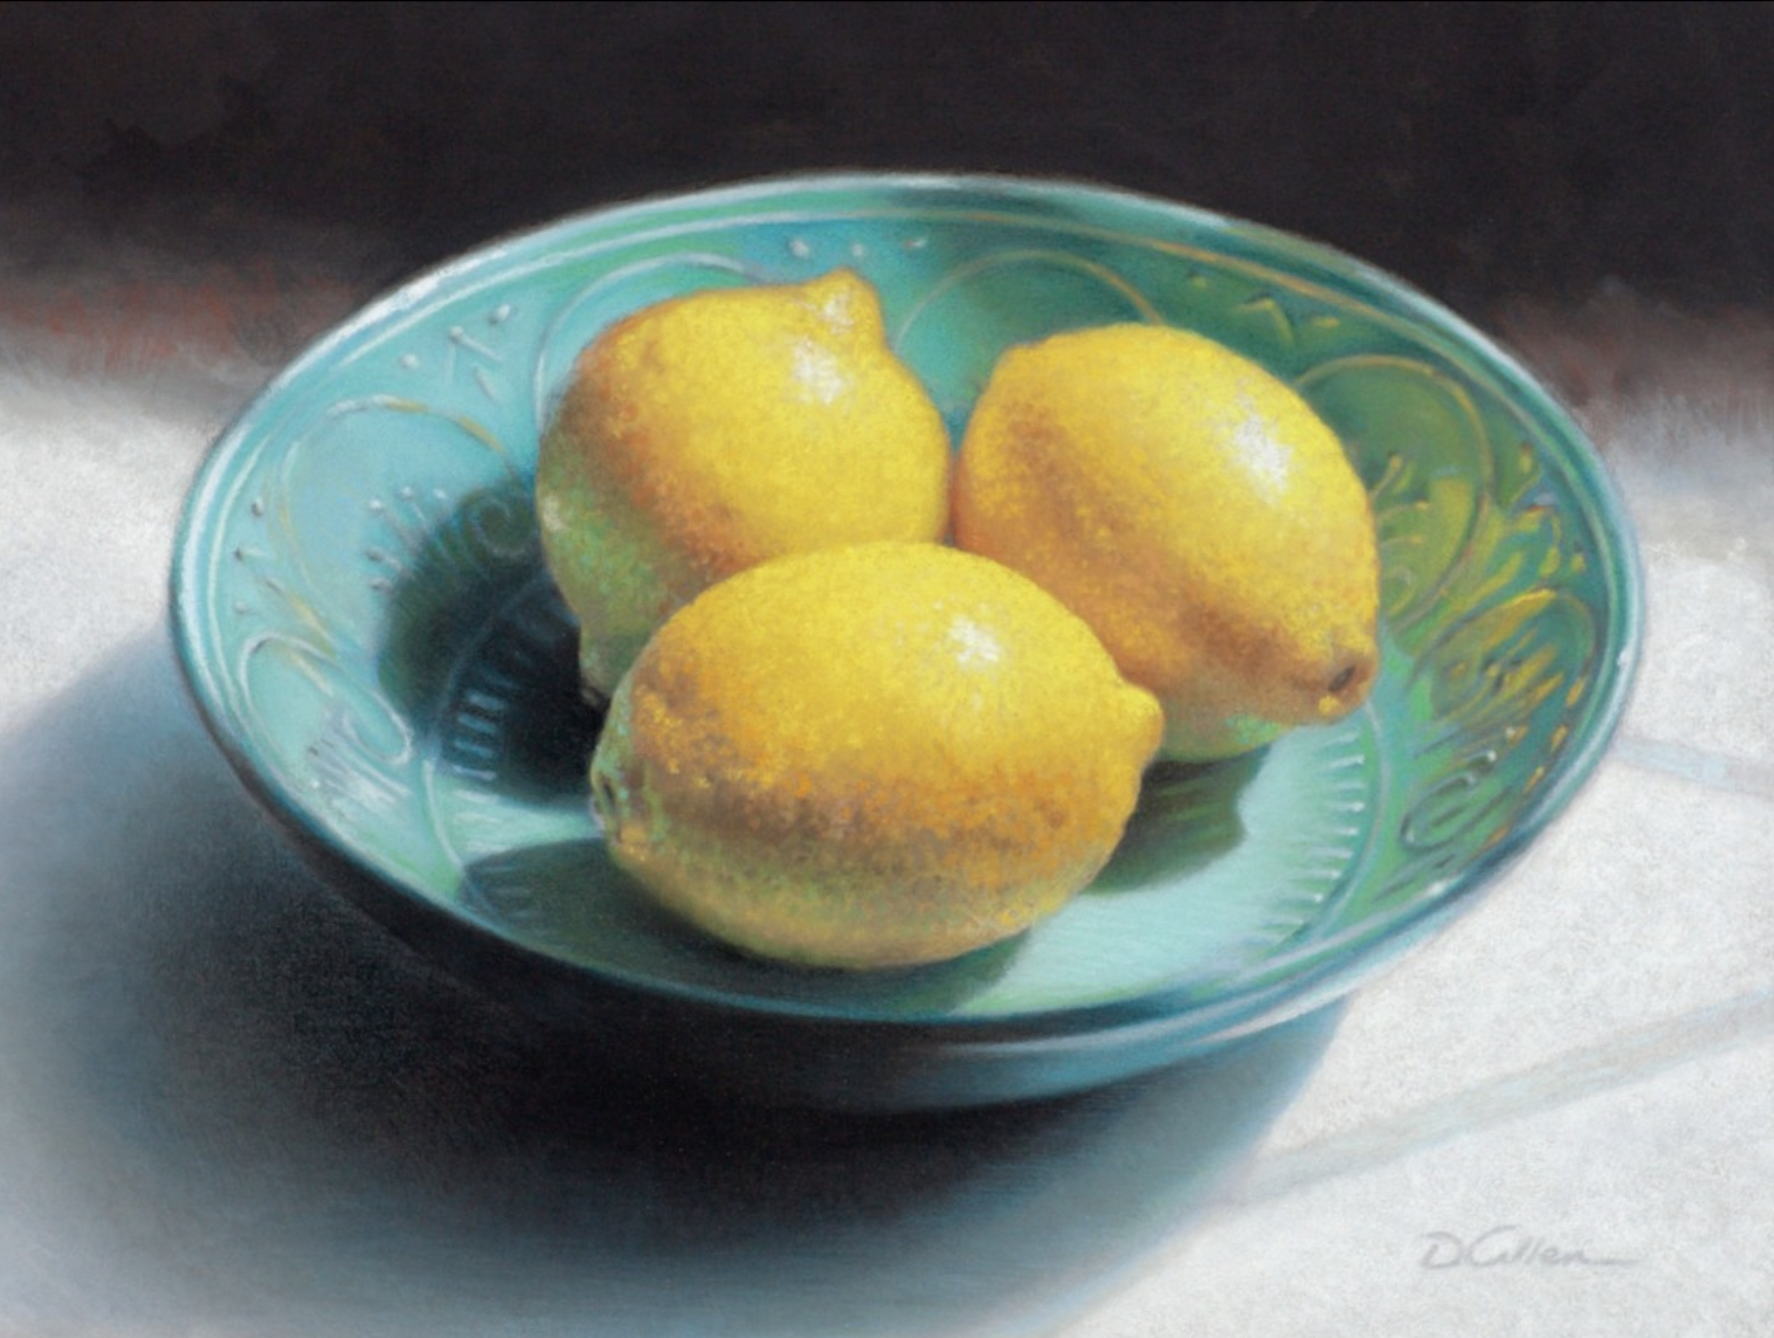 Diane Allen, "Lemons in a Blue Bowl," pastel. Honourable Mention in Dakota Art Pastels Third Quarter Contest